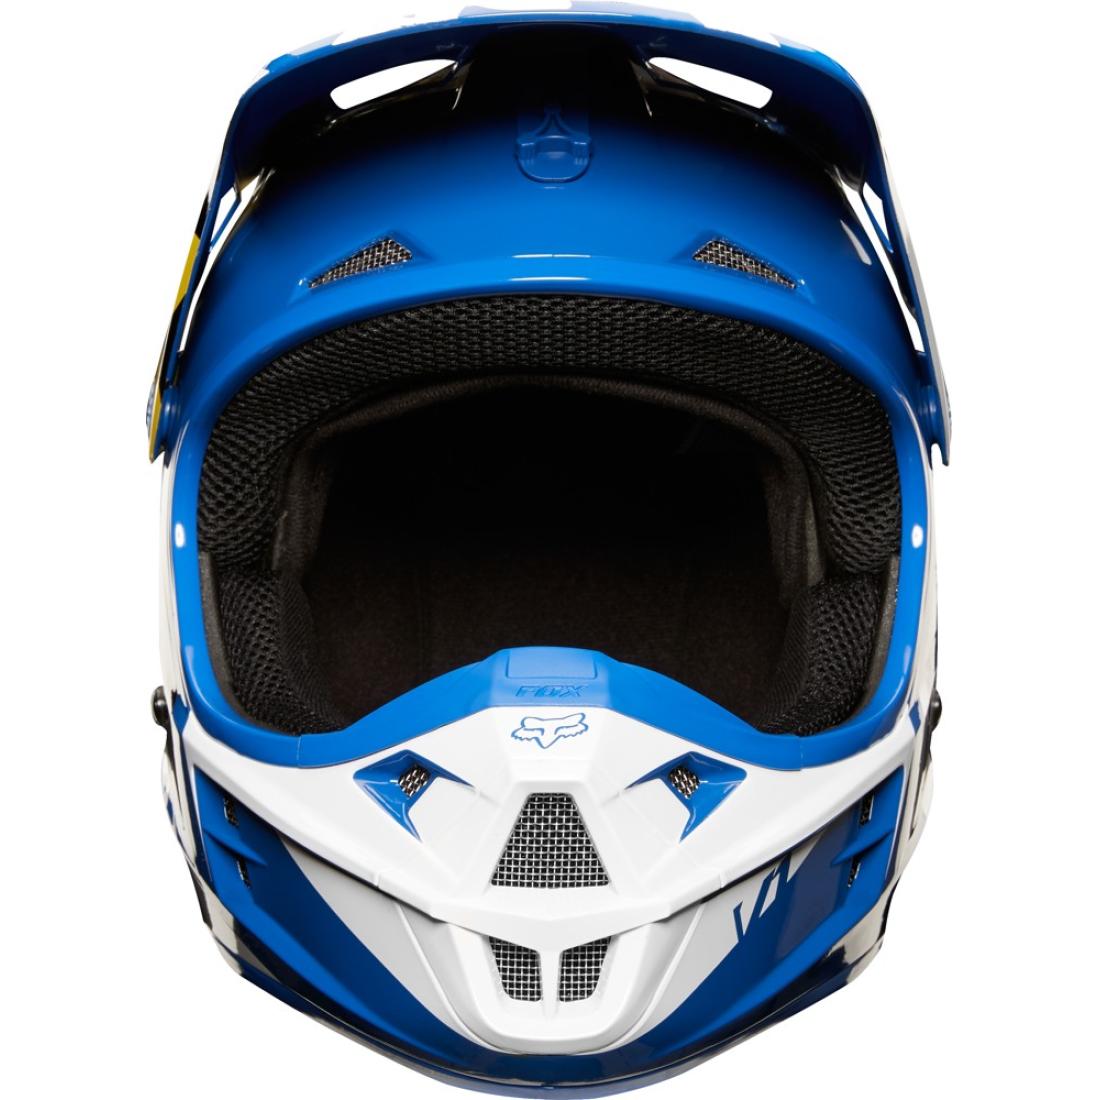 Yth V1 Race Helmet, Ece Blue